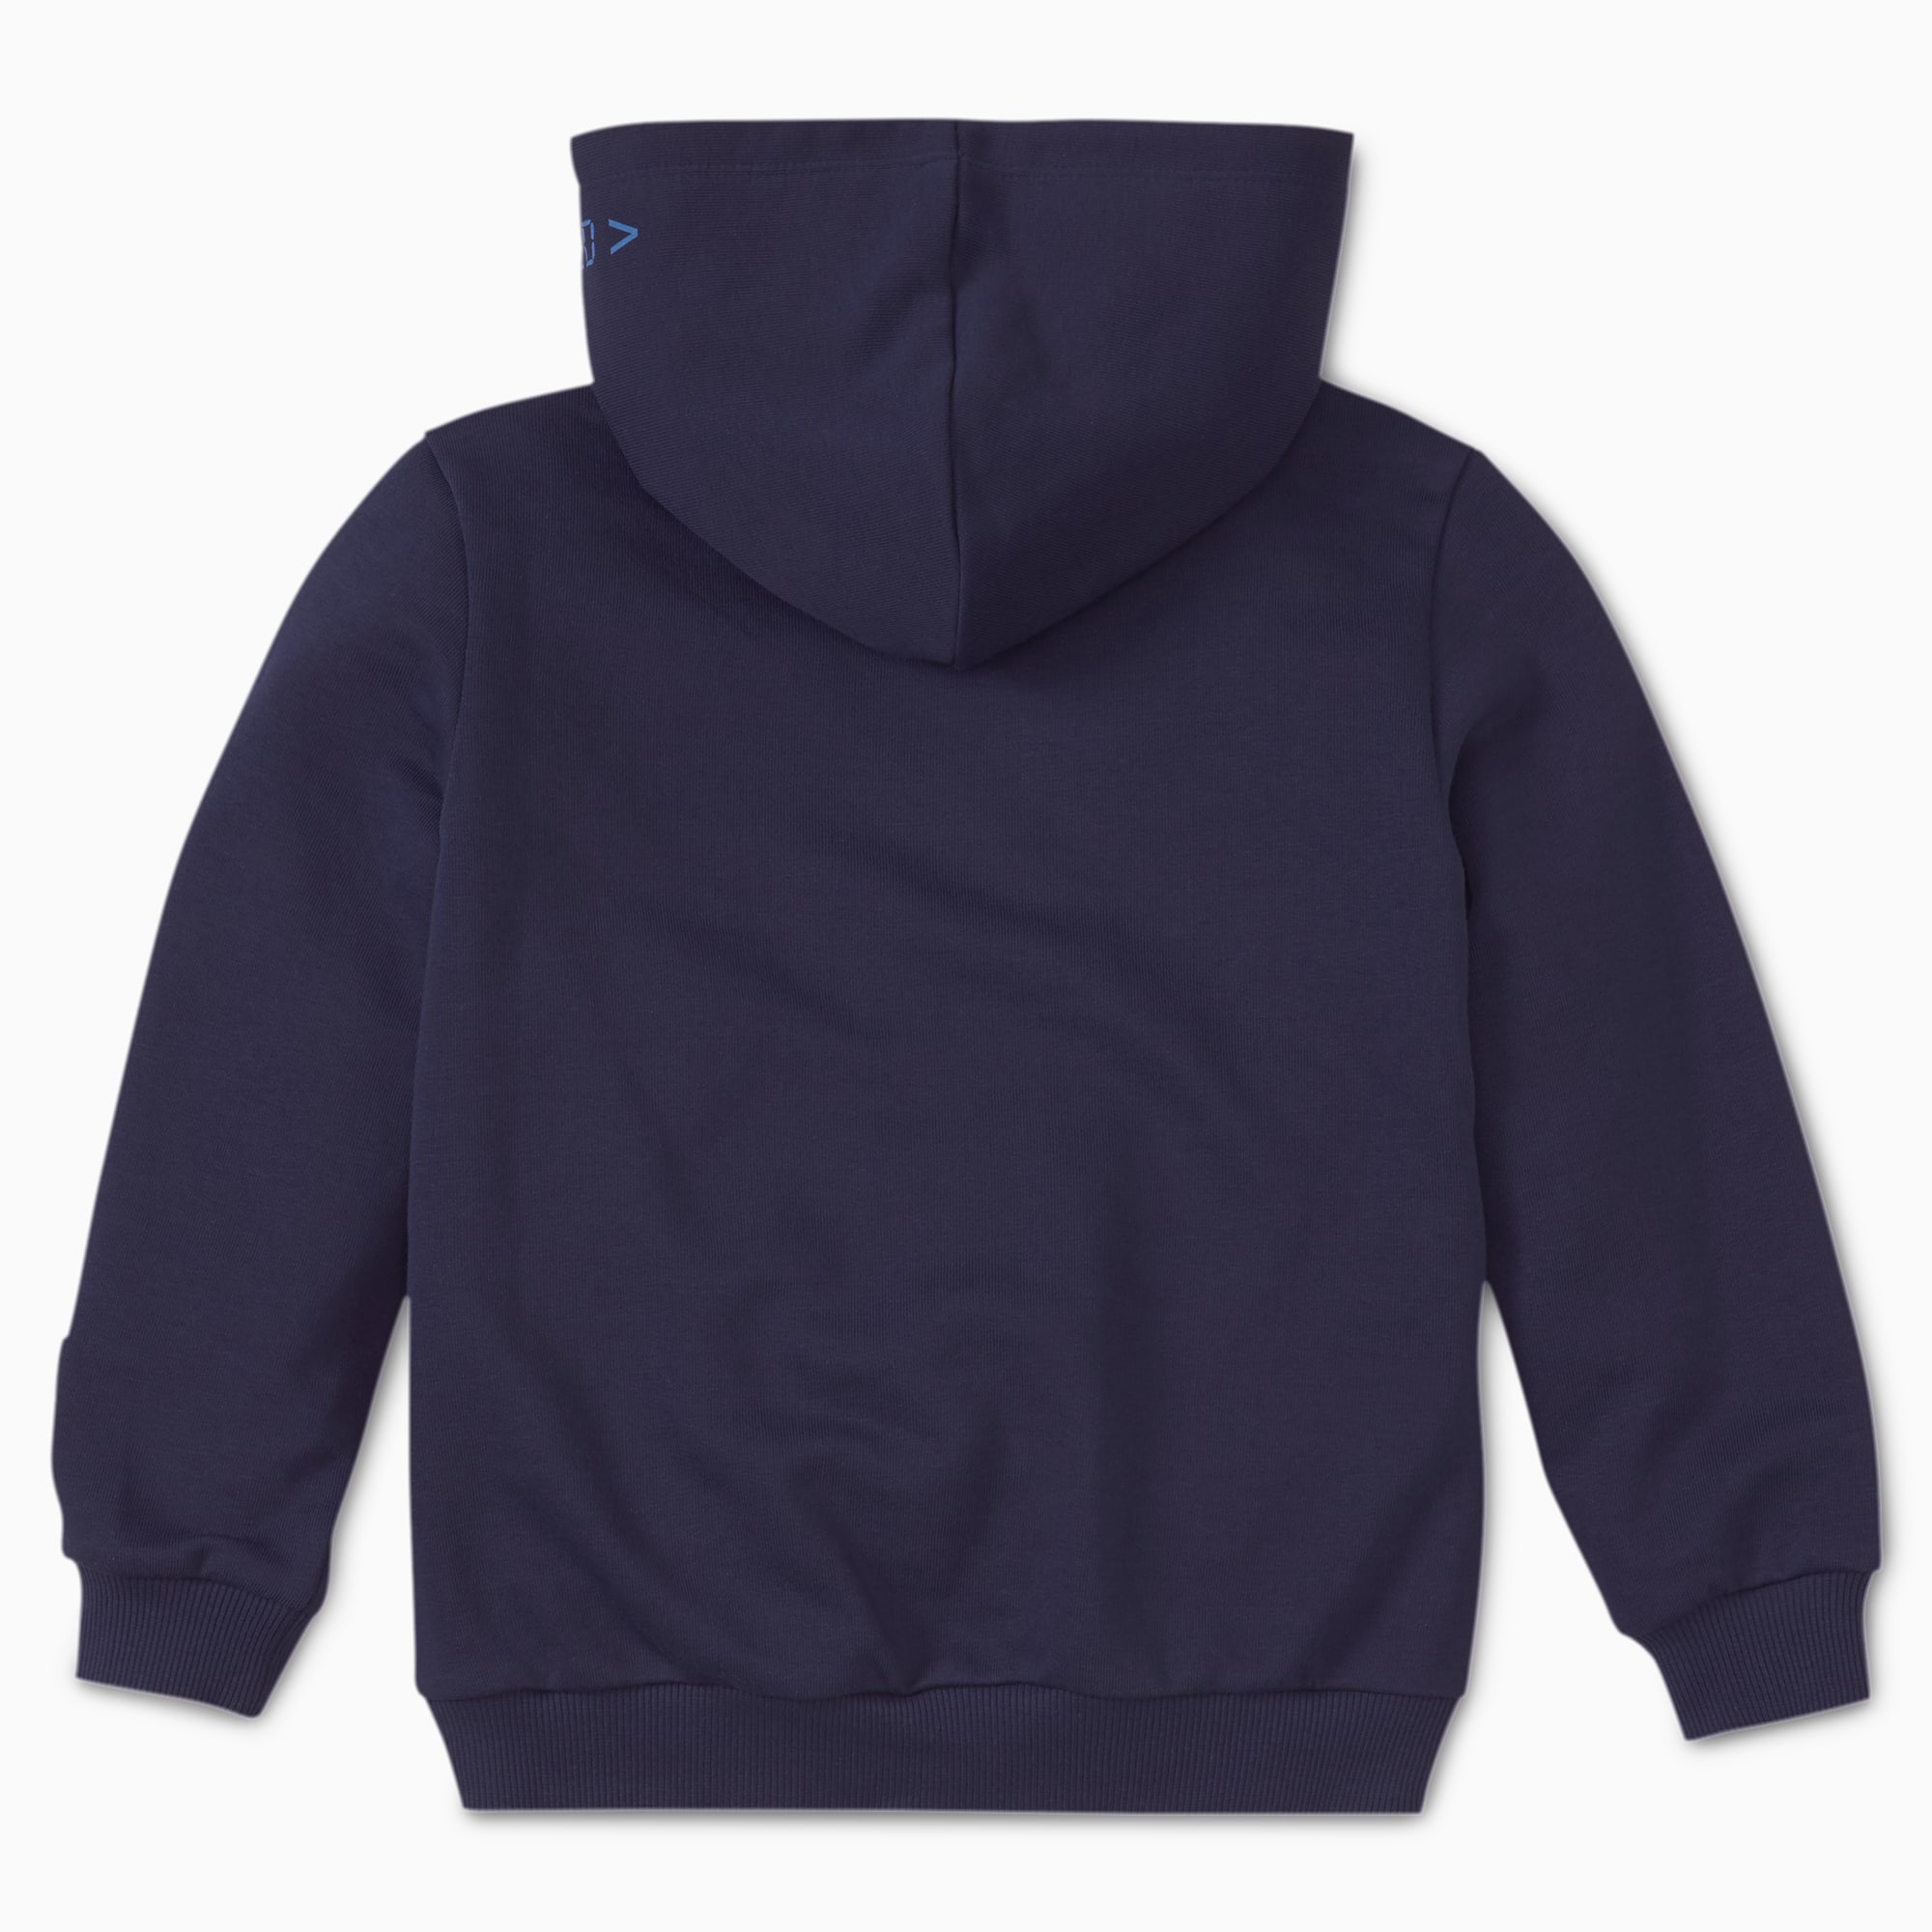 blue puma hoodie